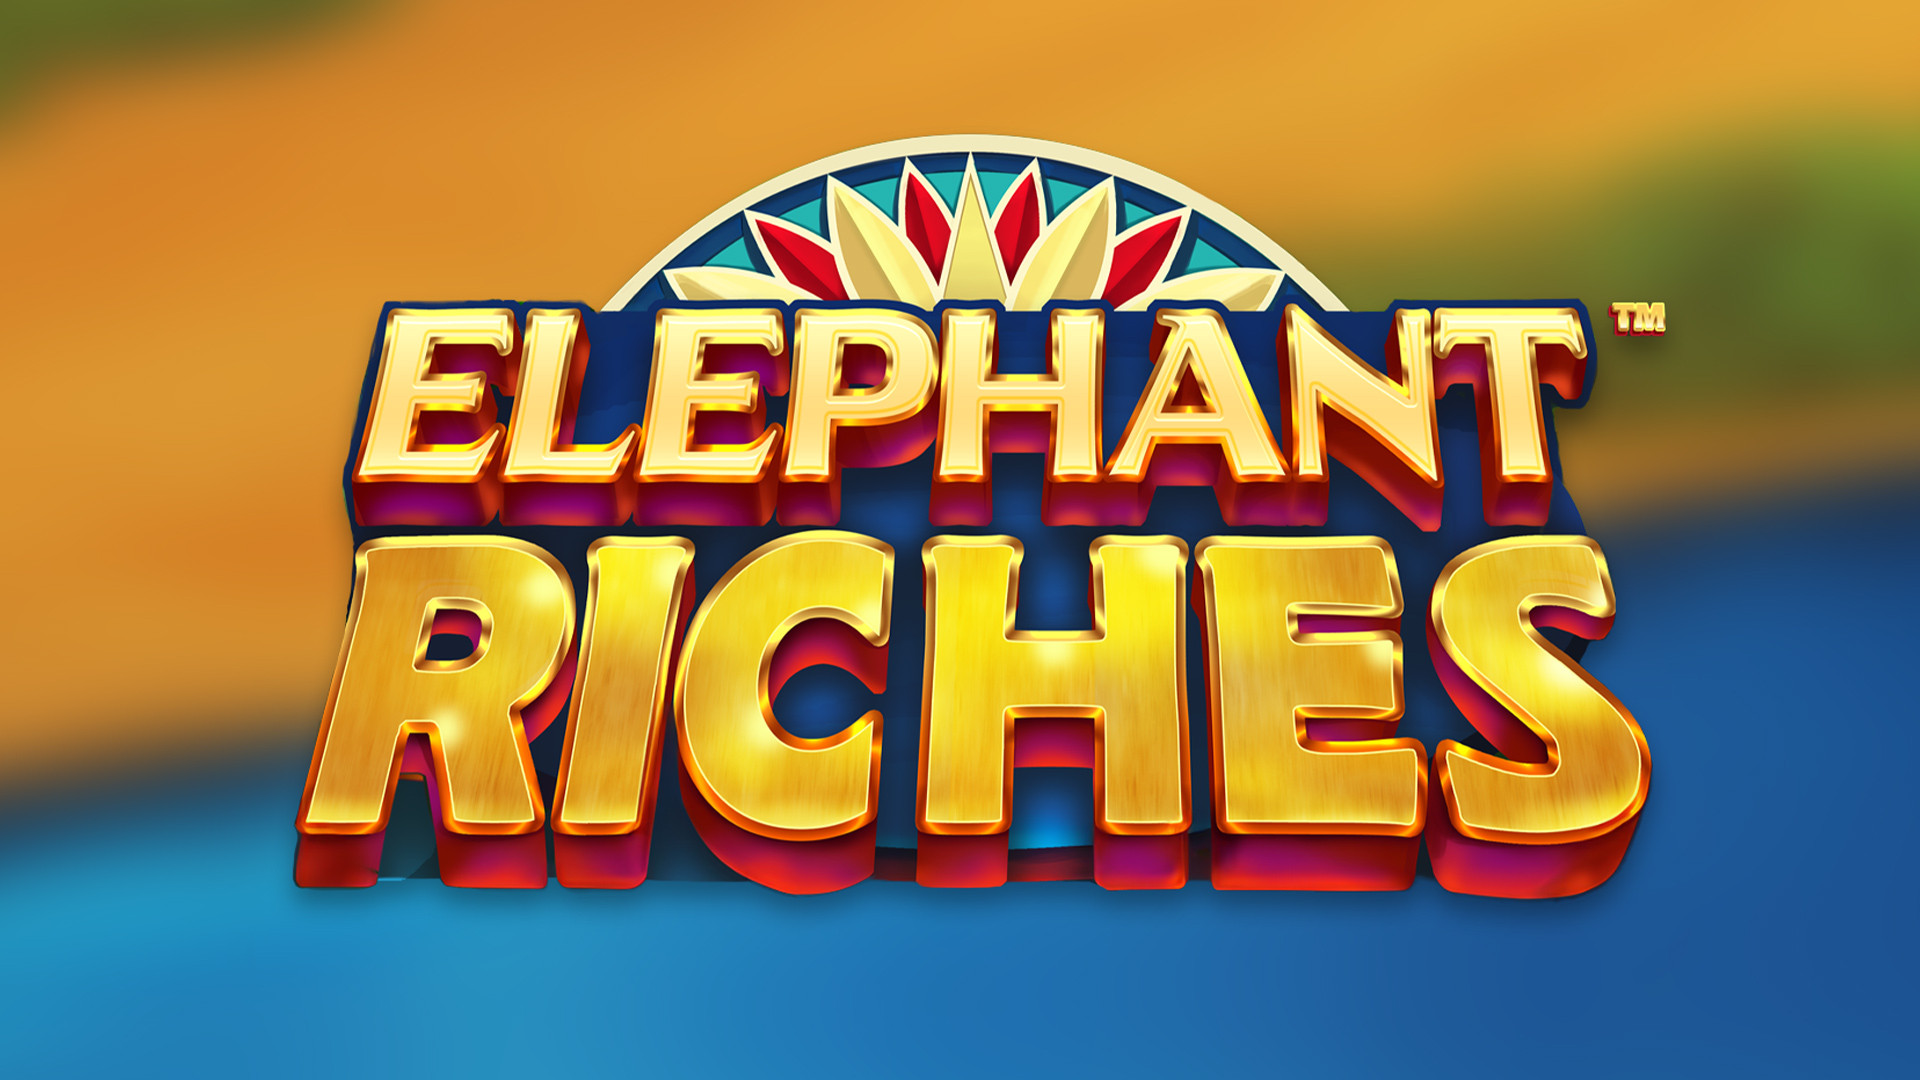 Elephant Riches